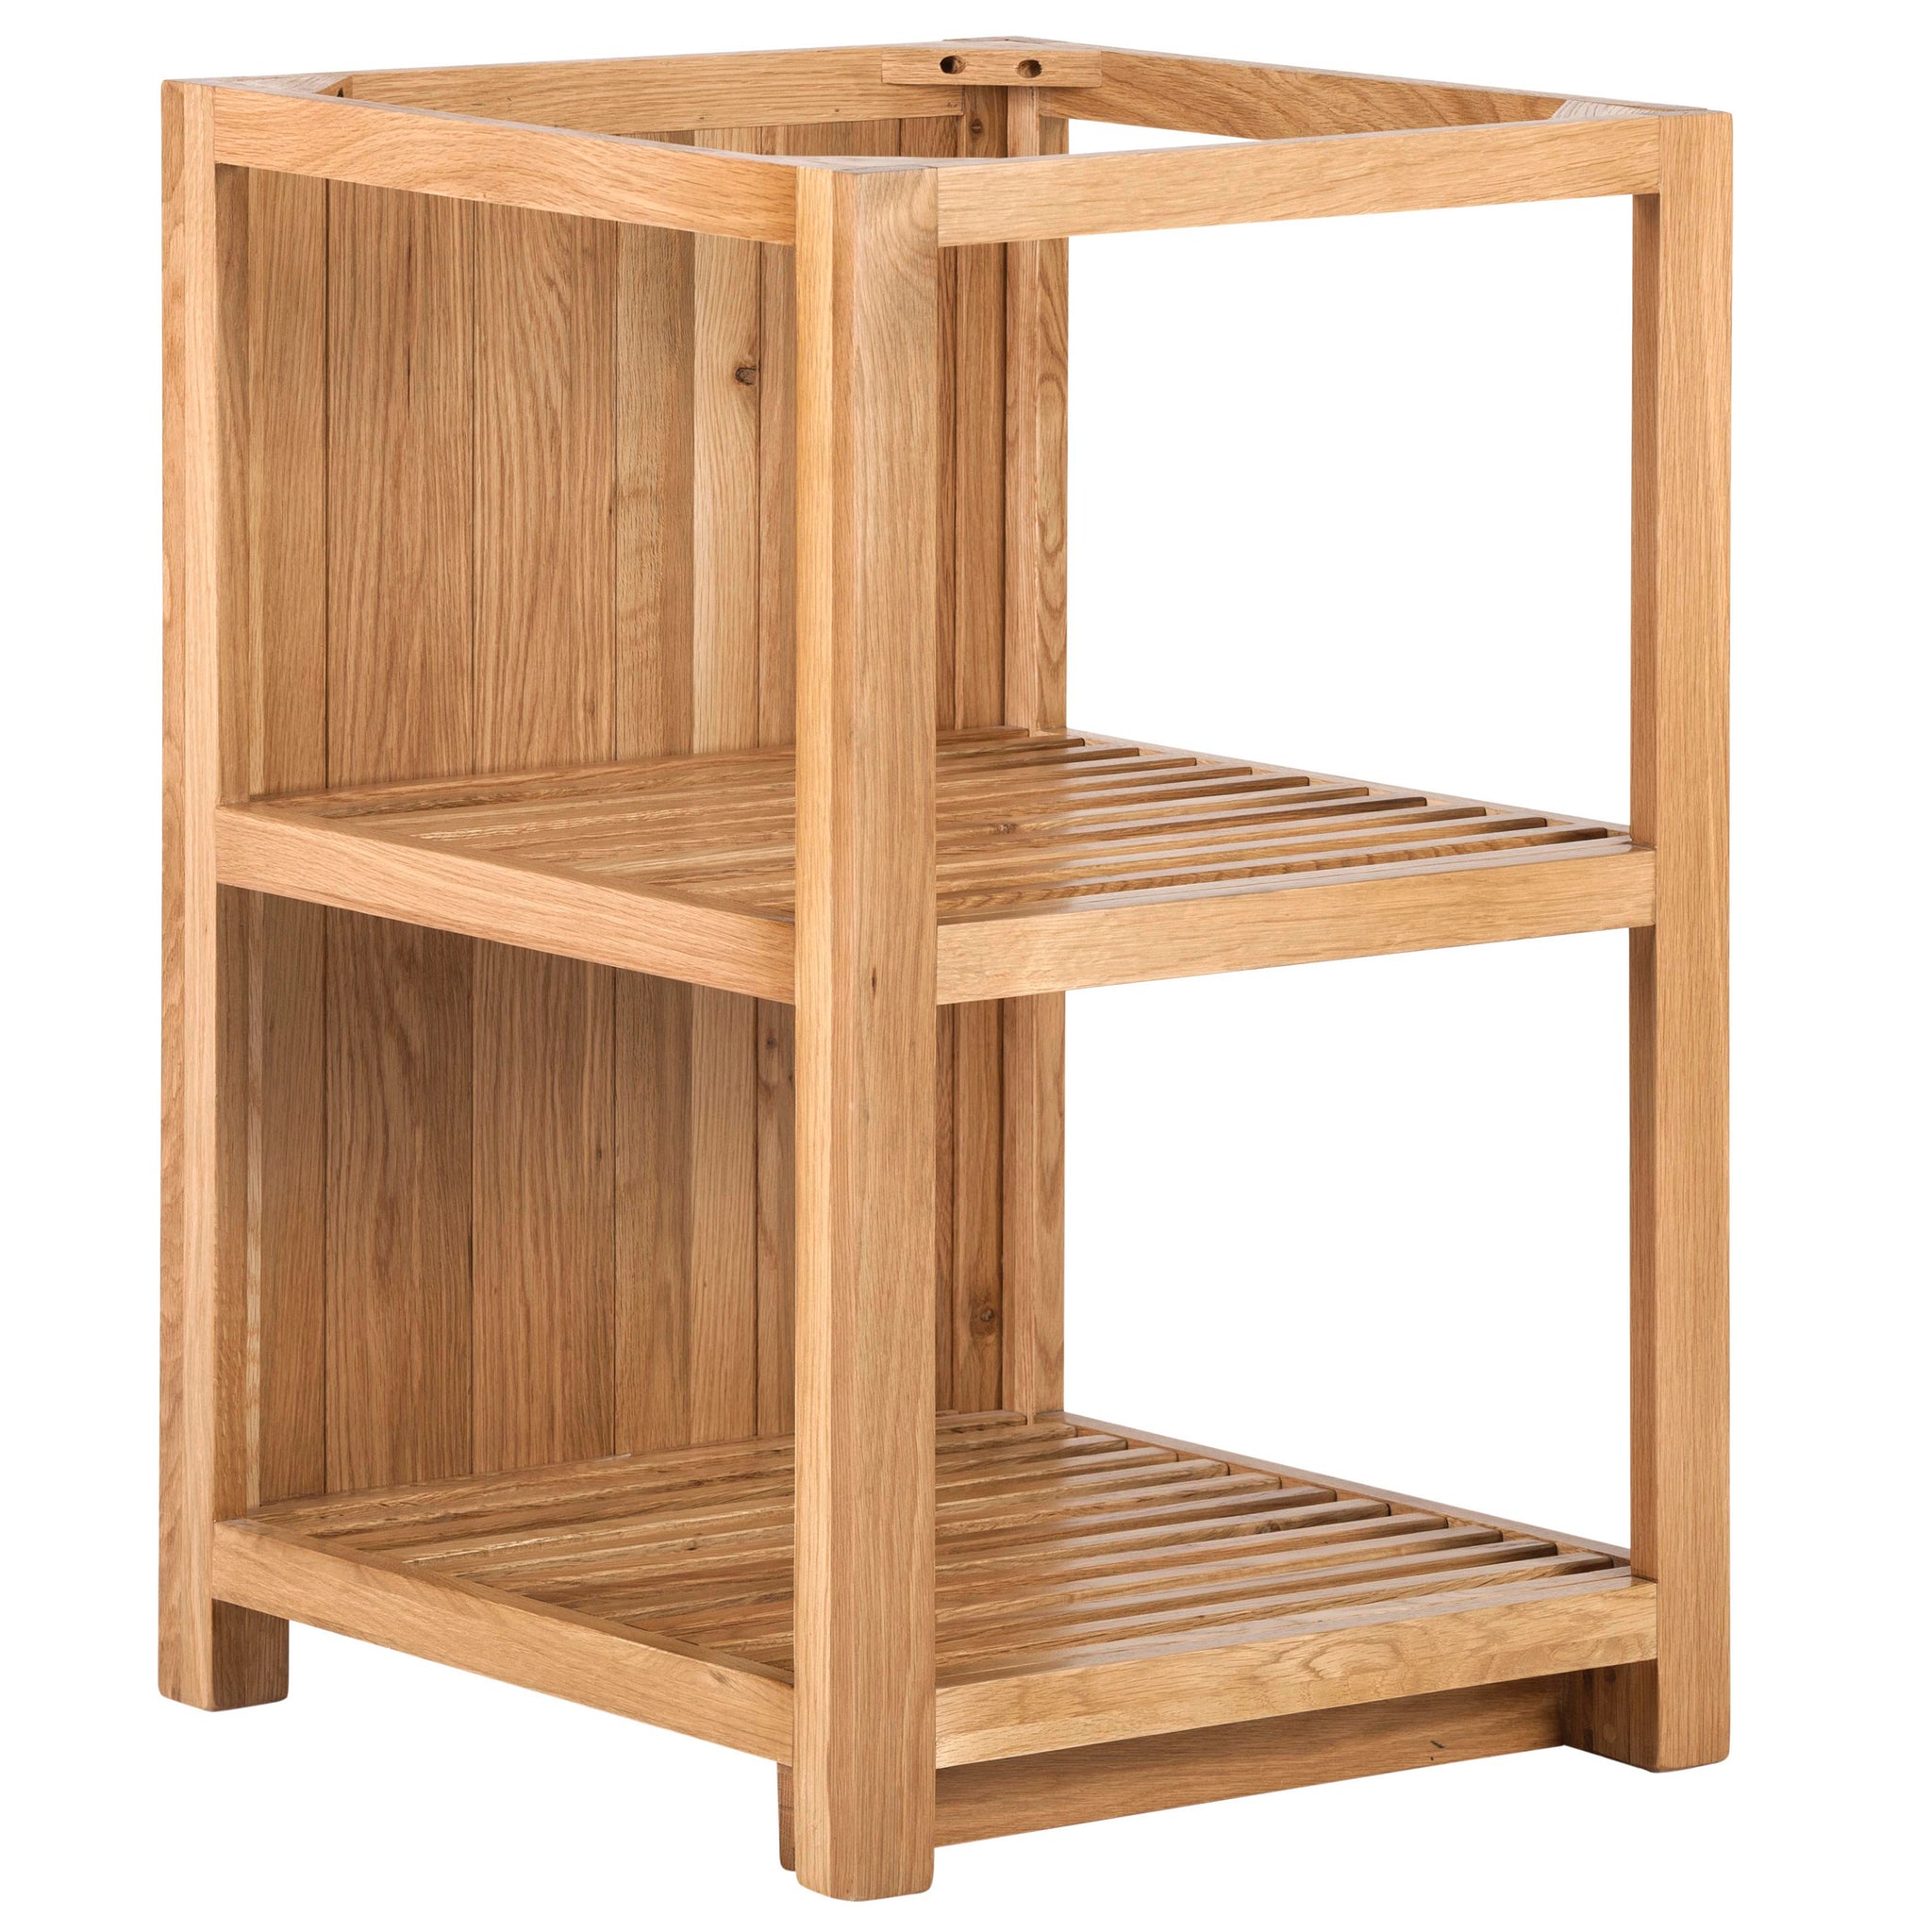 Small Open Slatted Oak Shelf Cabinet with Back Panel